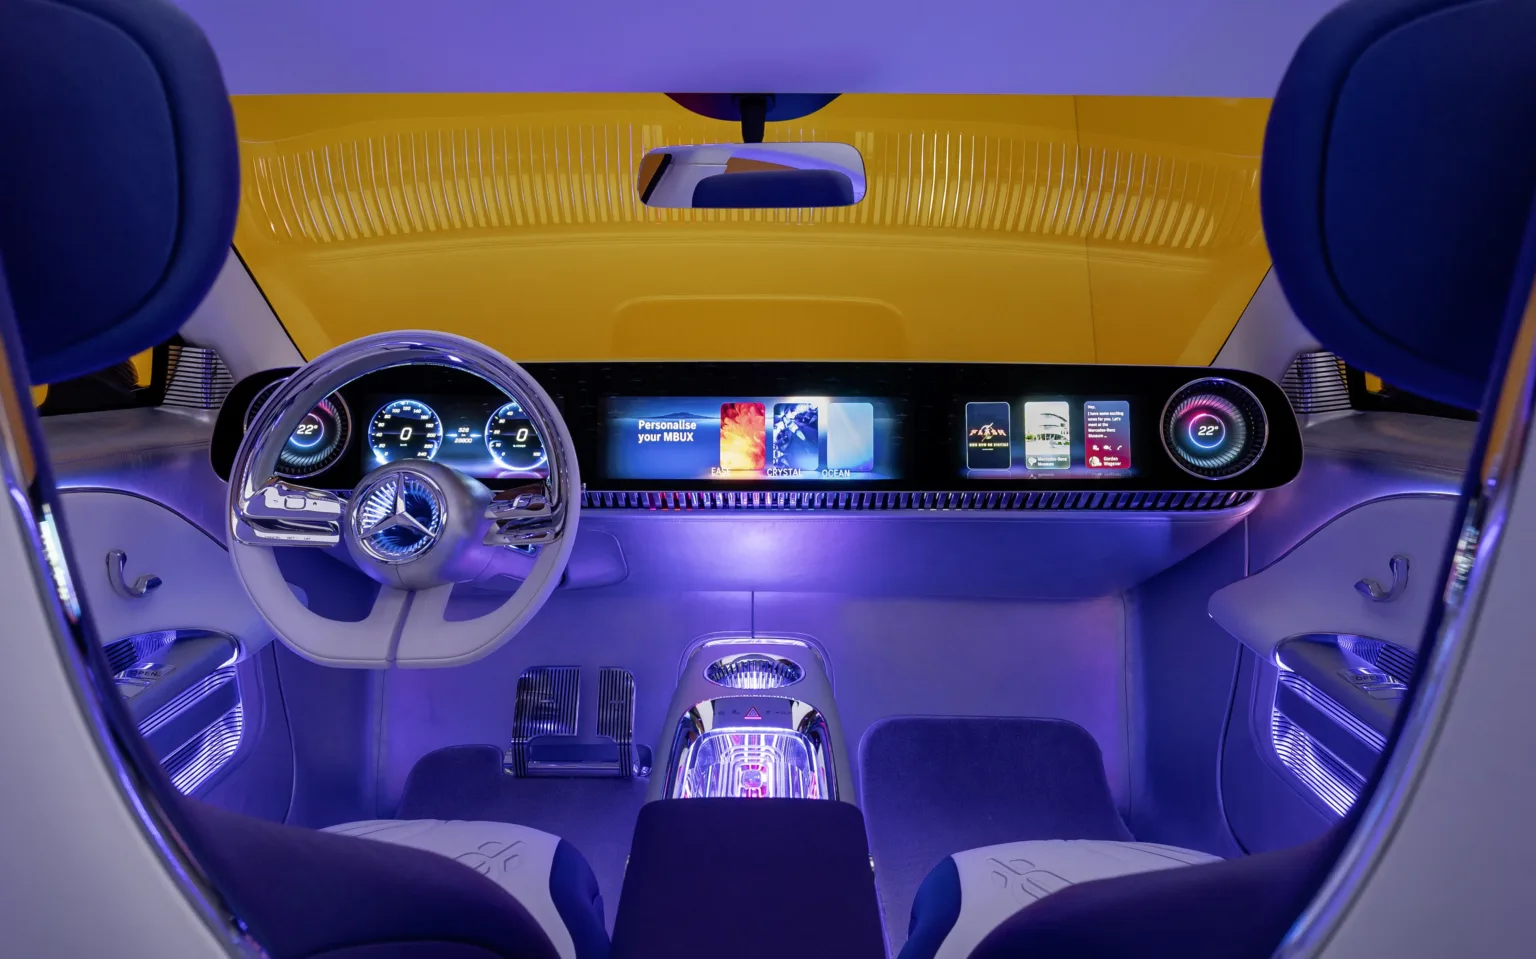 Mercedes-Benz Concept CLA Class Interior Image 27